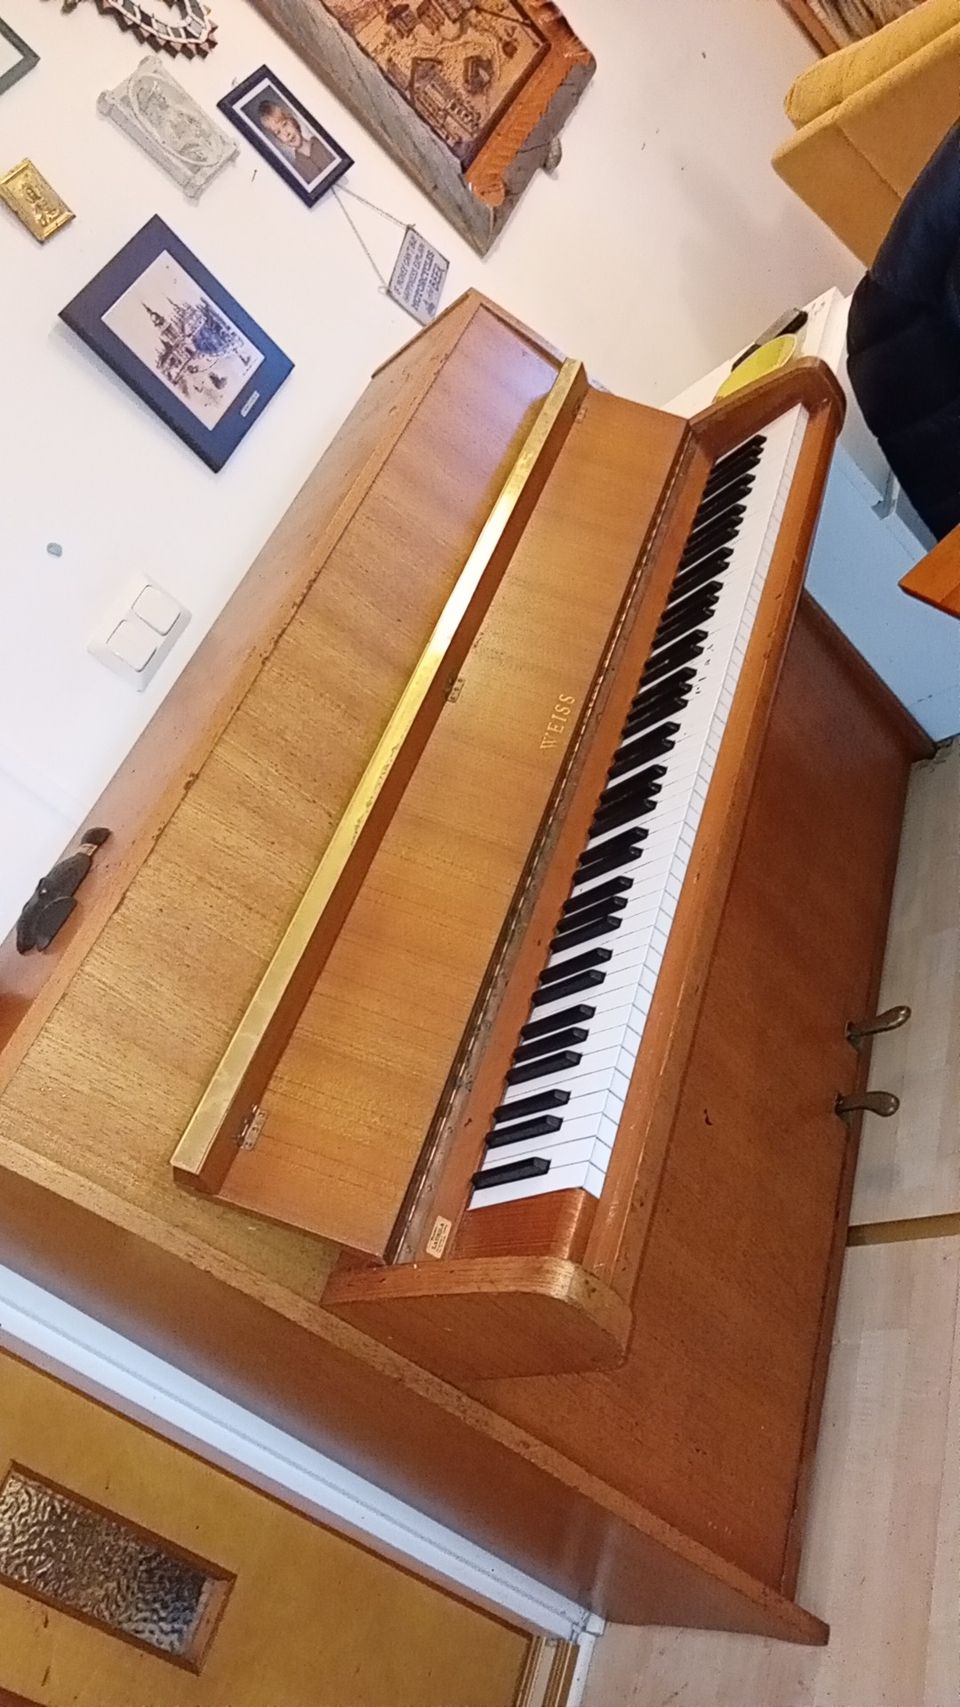 Weiss piano